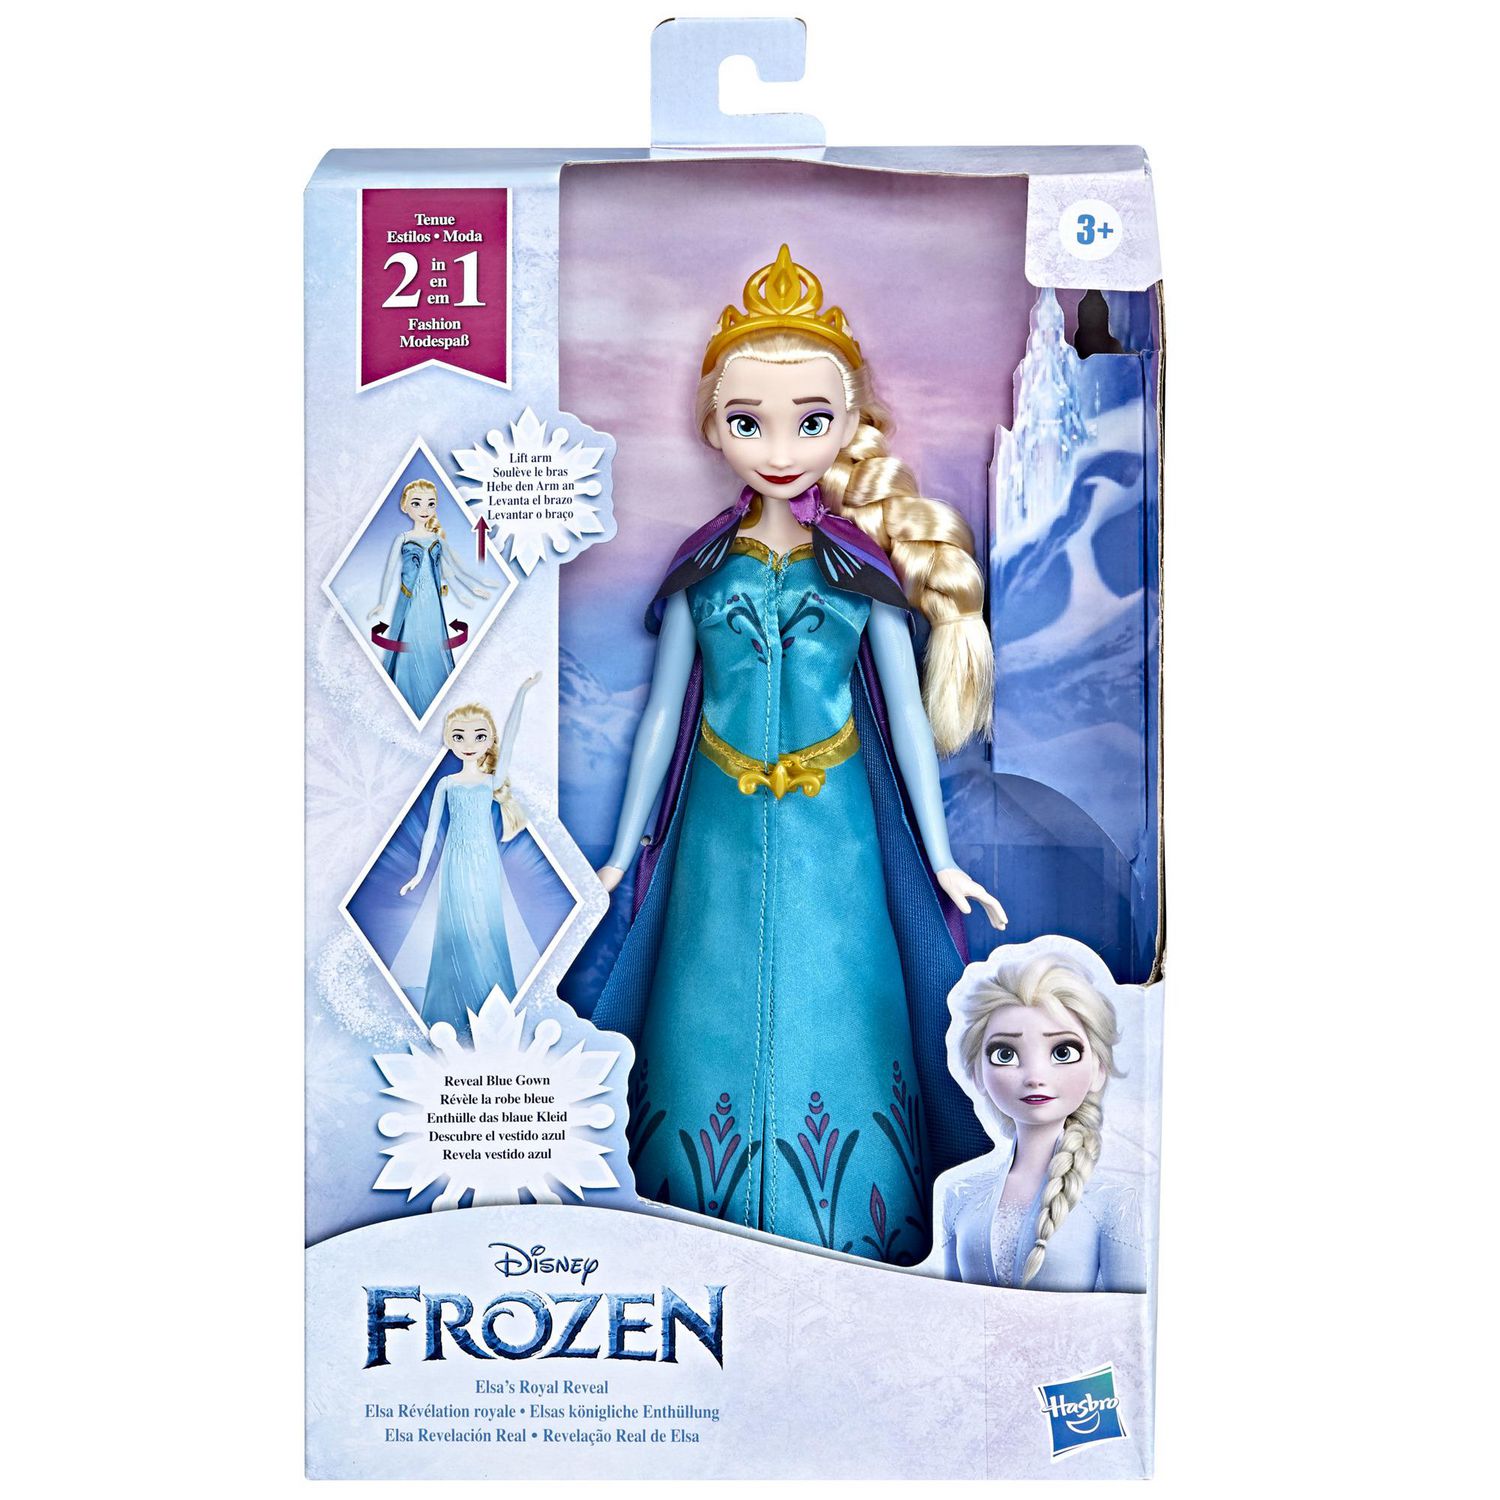 Disney's Frozen Elsa's Royal Reveal, Elsa Doll with 2-in-1 Fashion